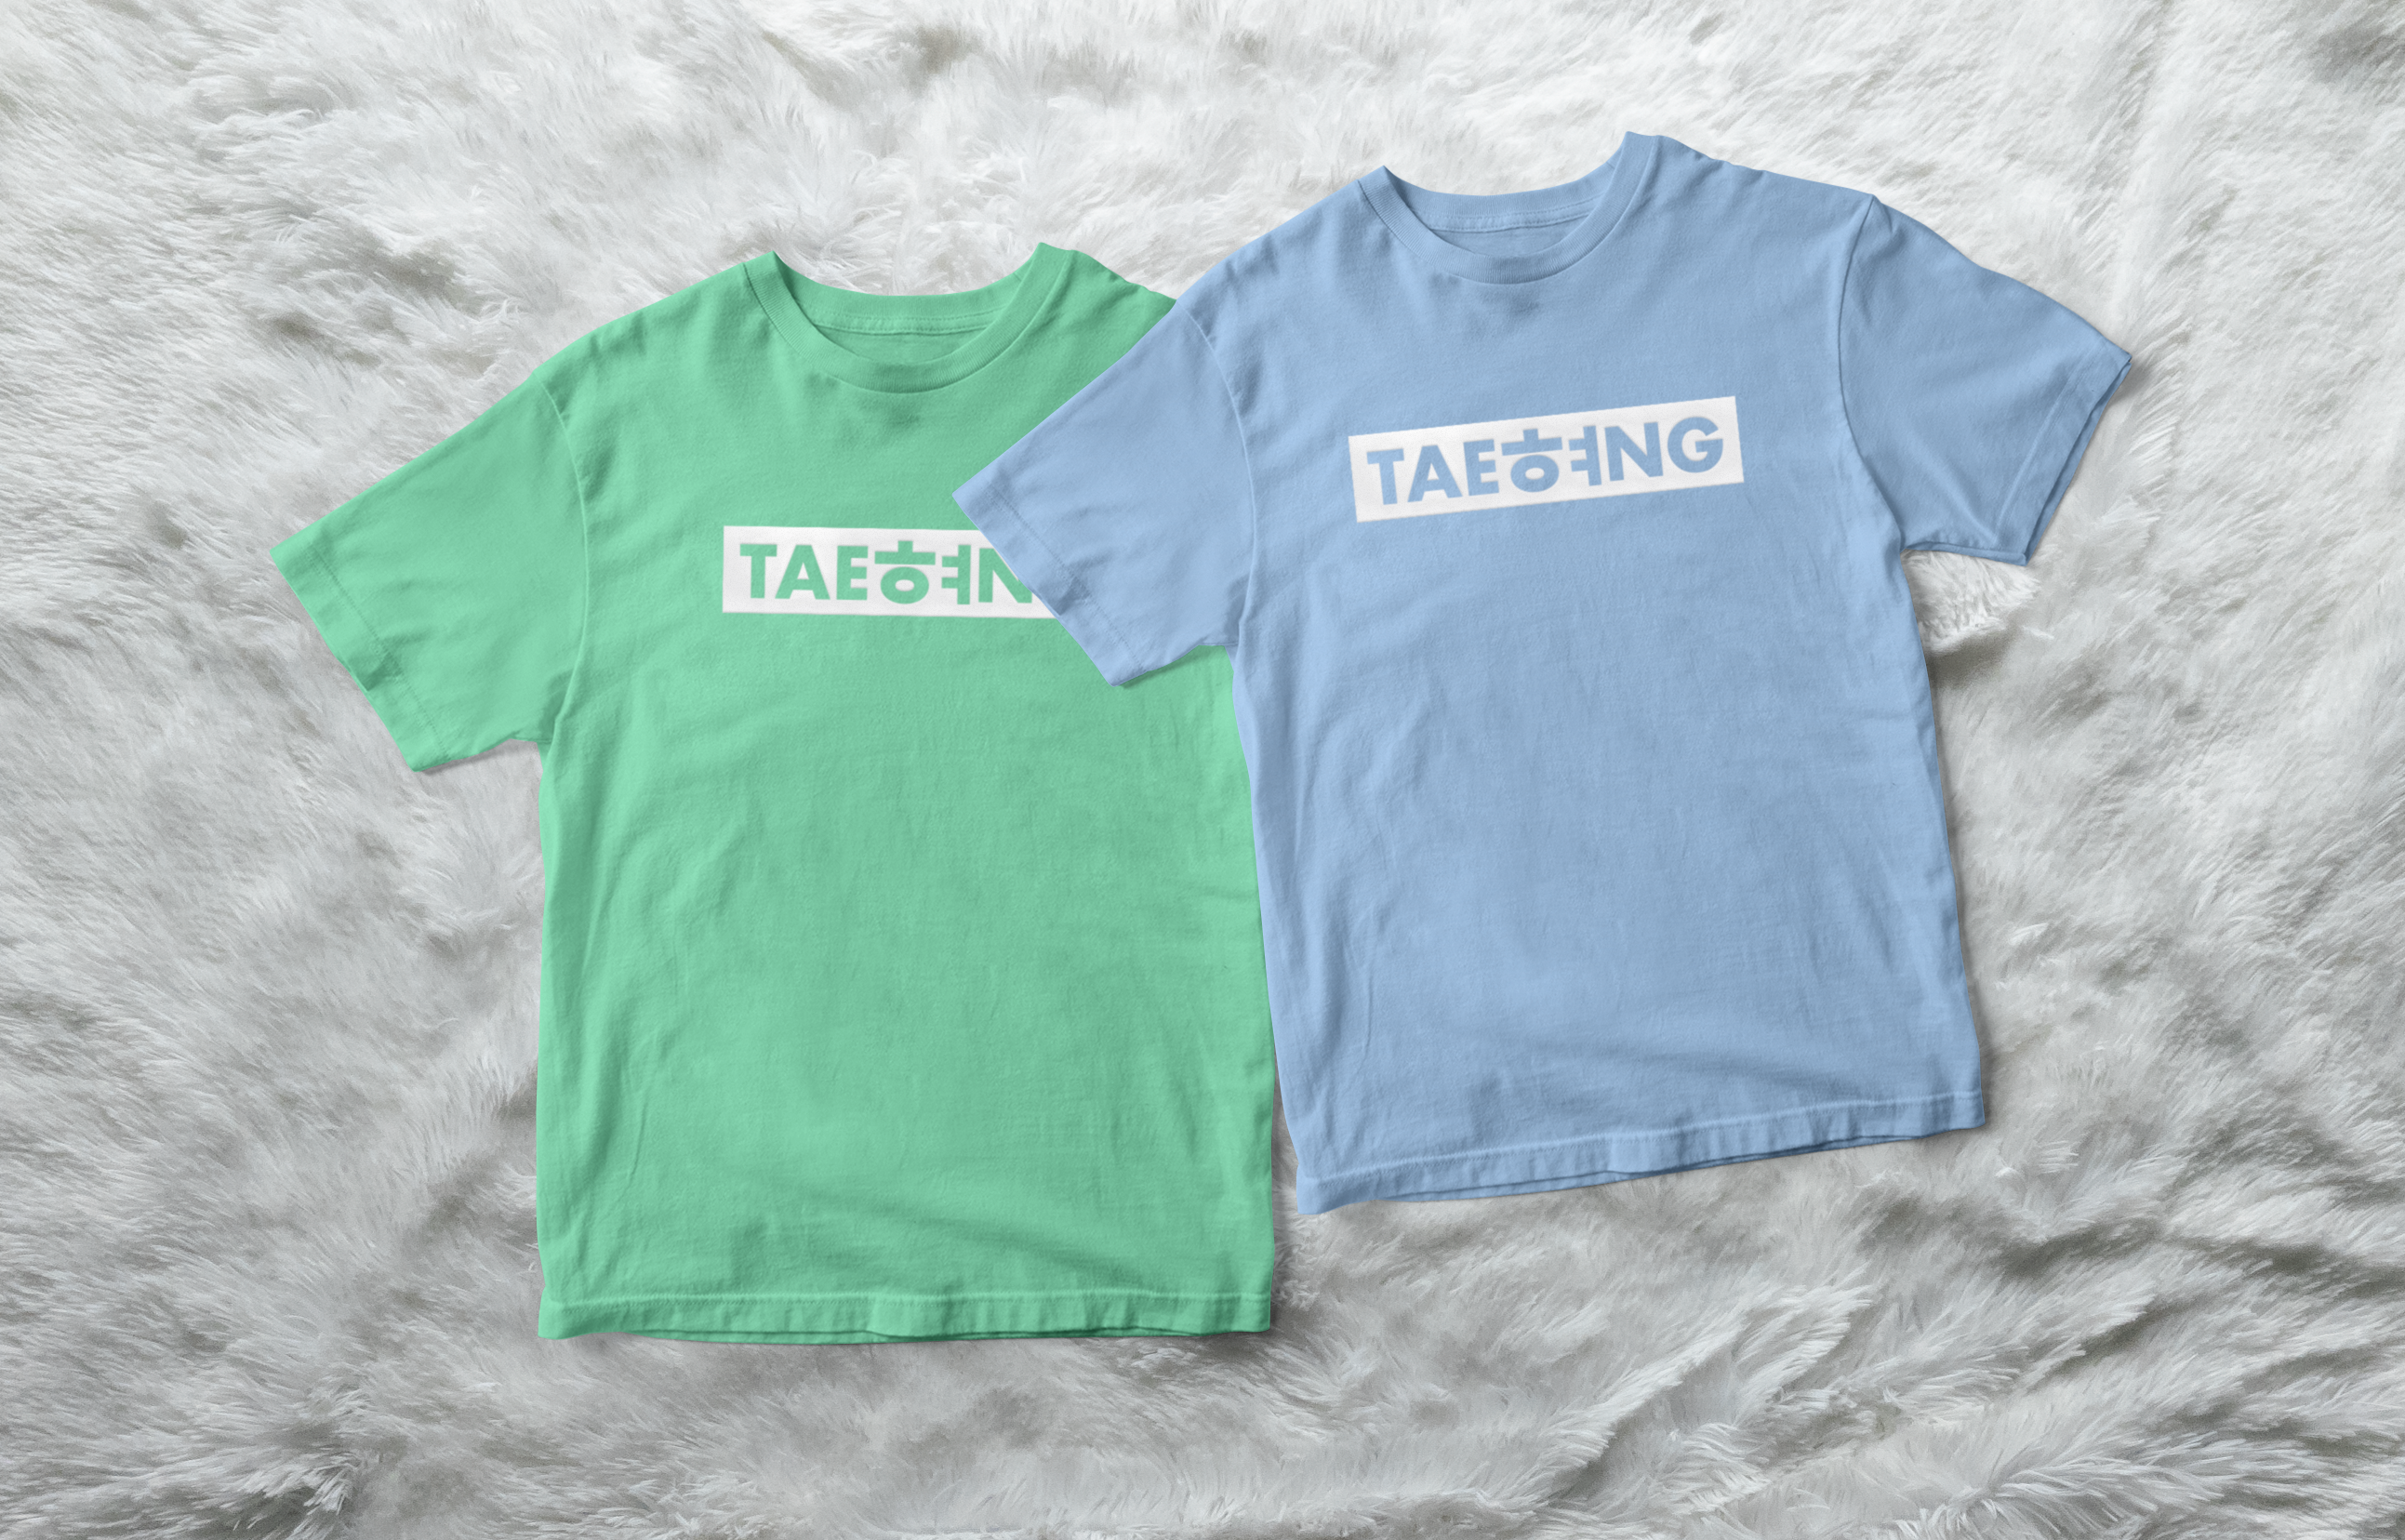 Taehyung Bias Shirts and Hoodies